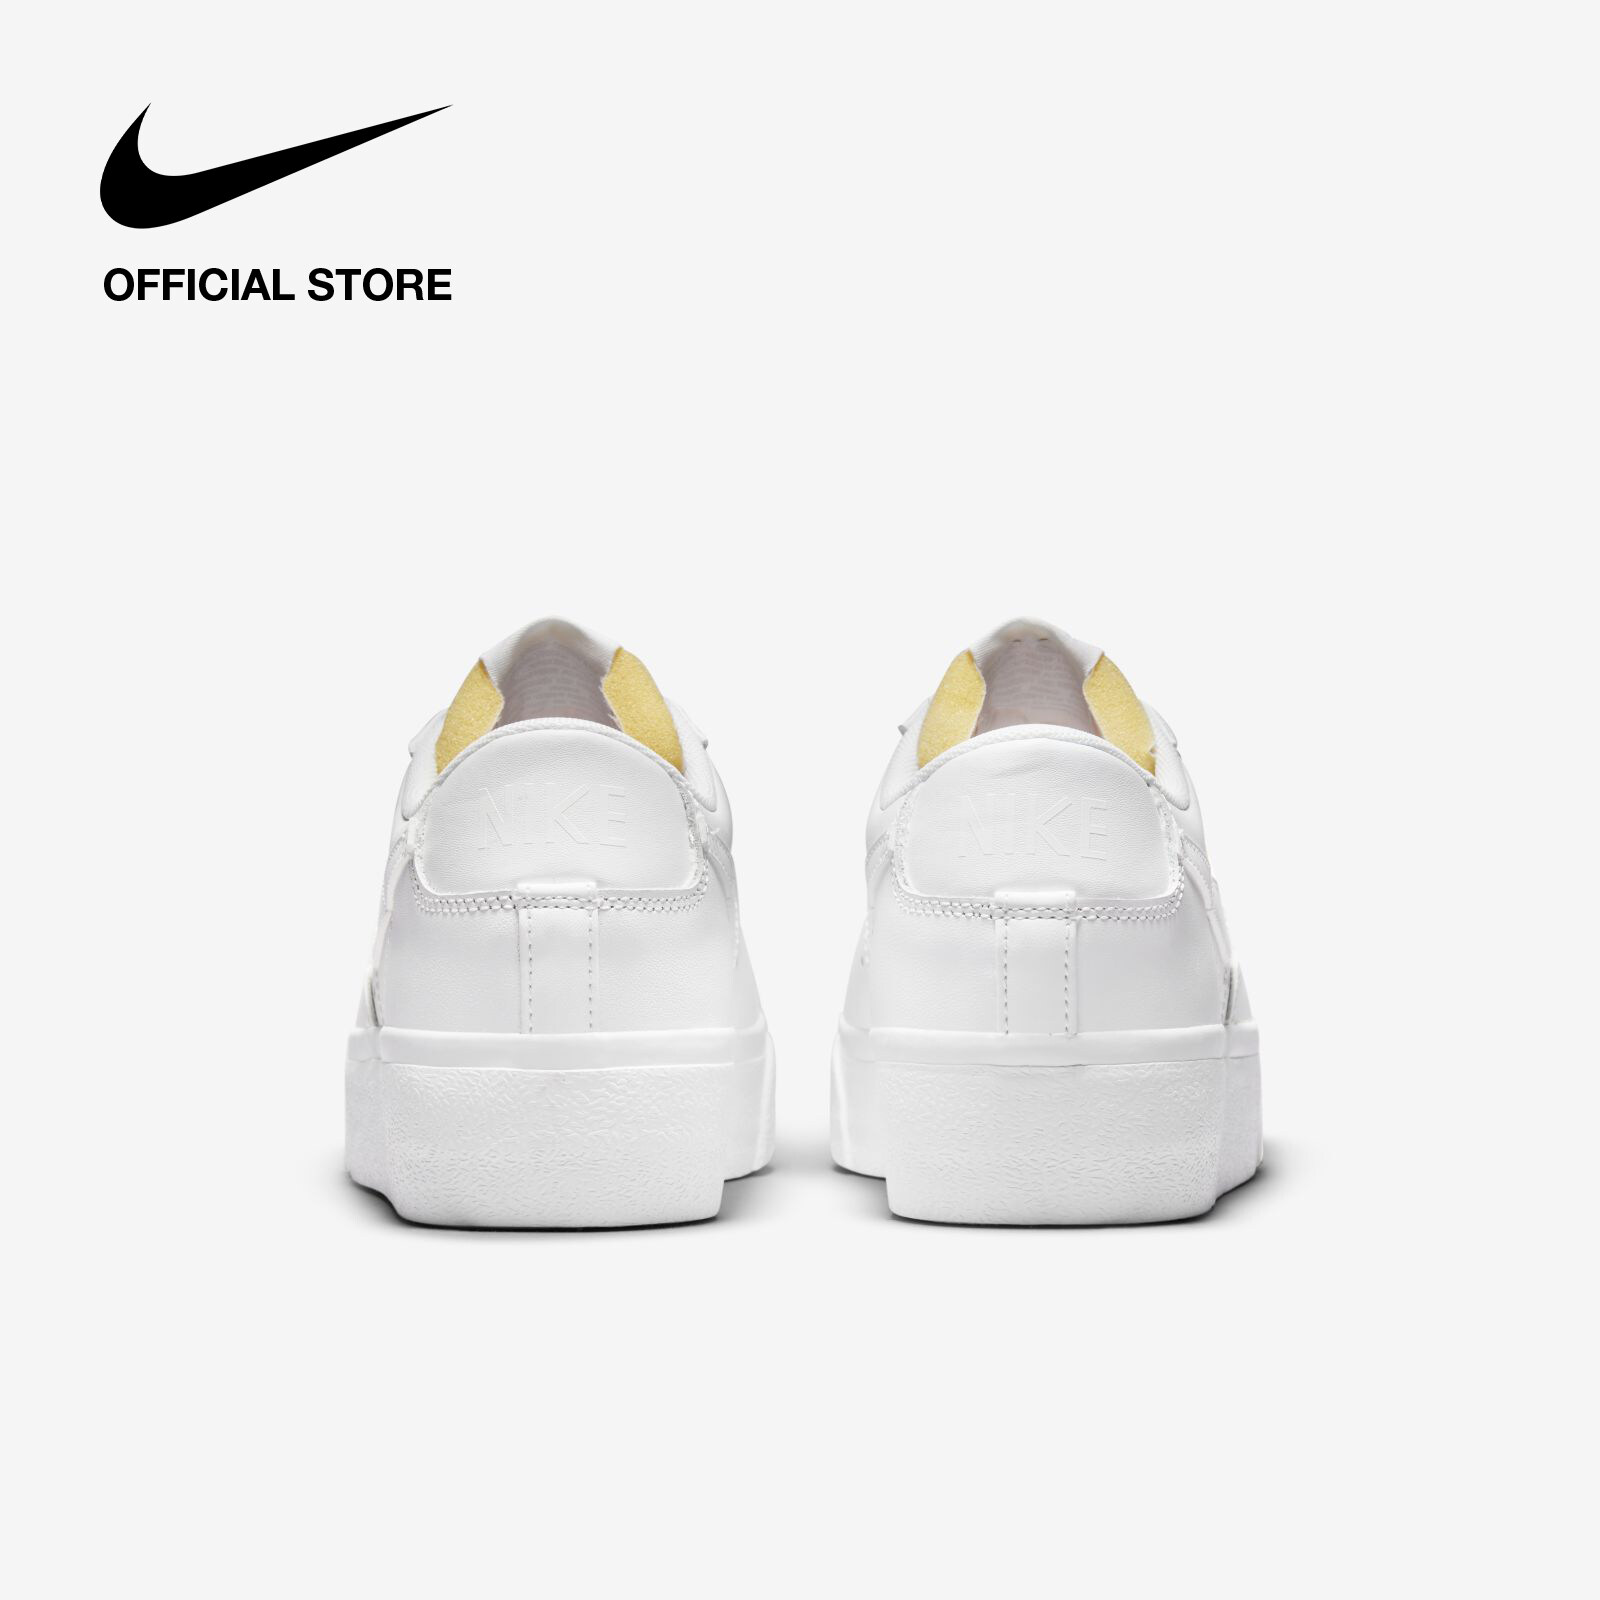 Nike Women's Blazer Low Platform Shoes - White รองเท้าผู้หญิง Nike Blazer Low Platform - สีขาว